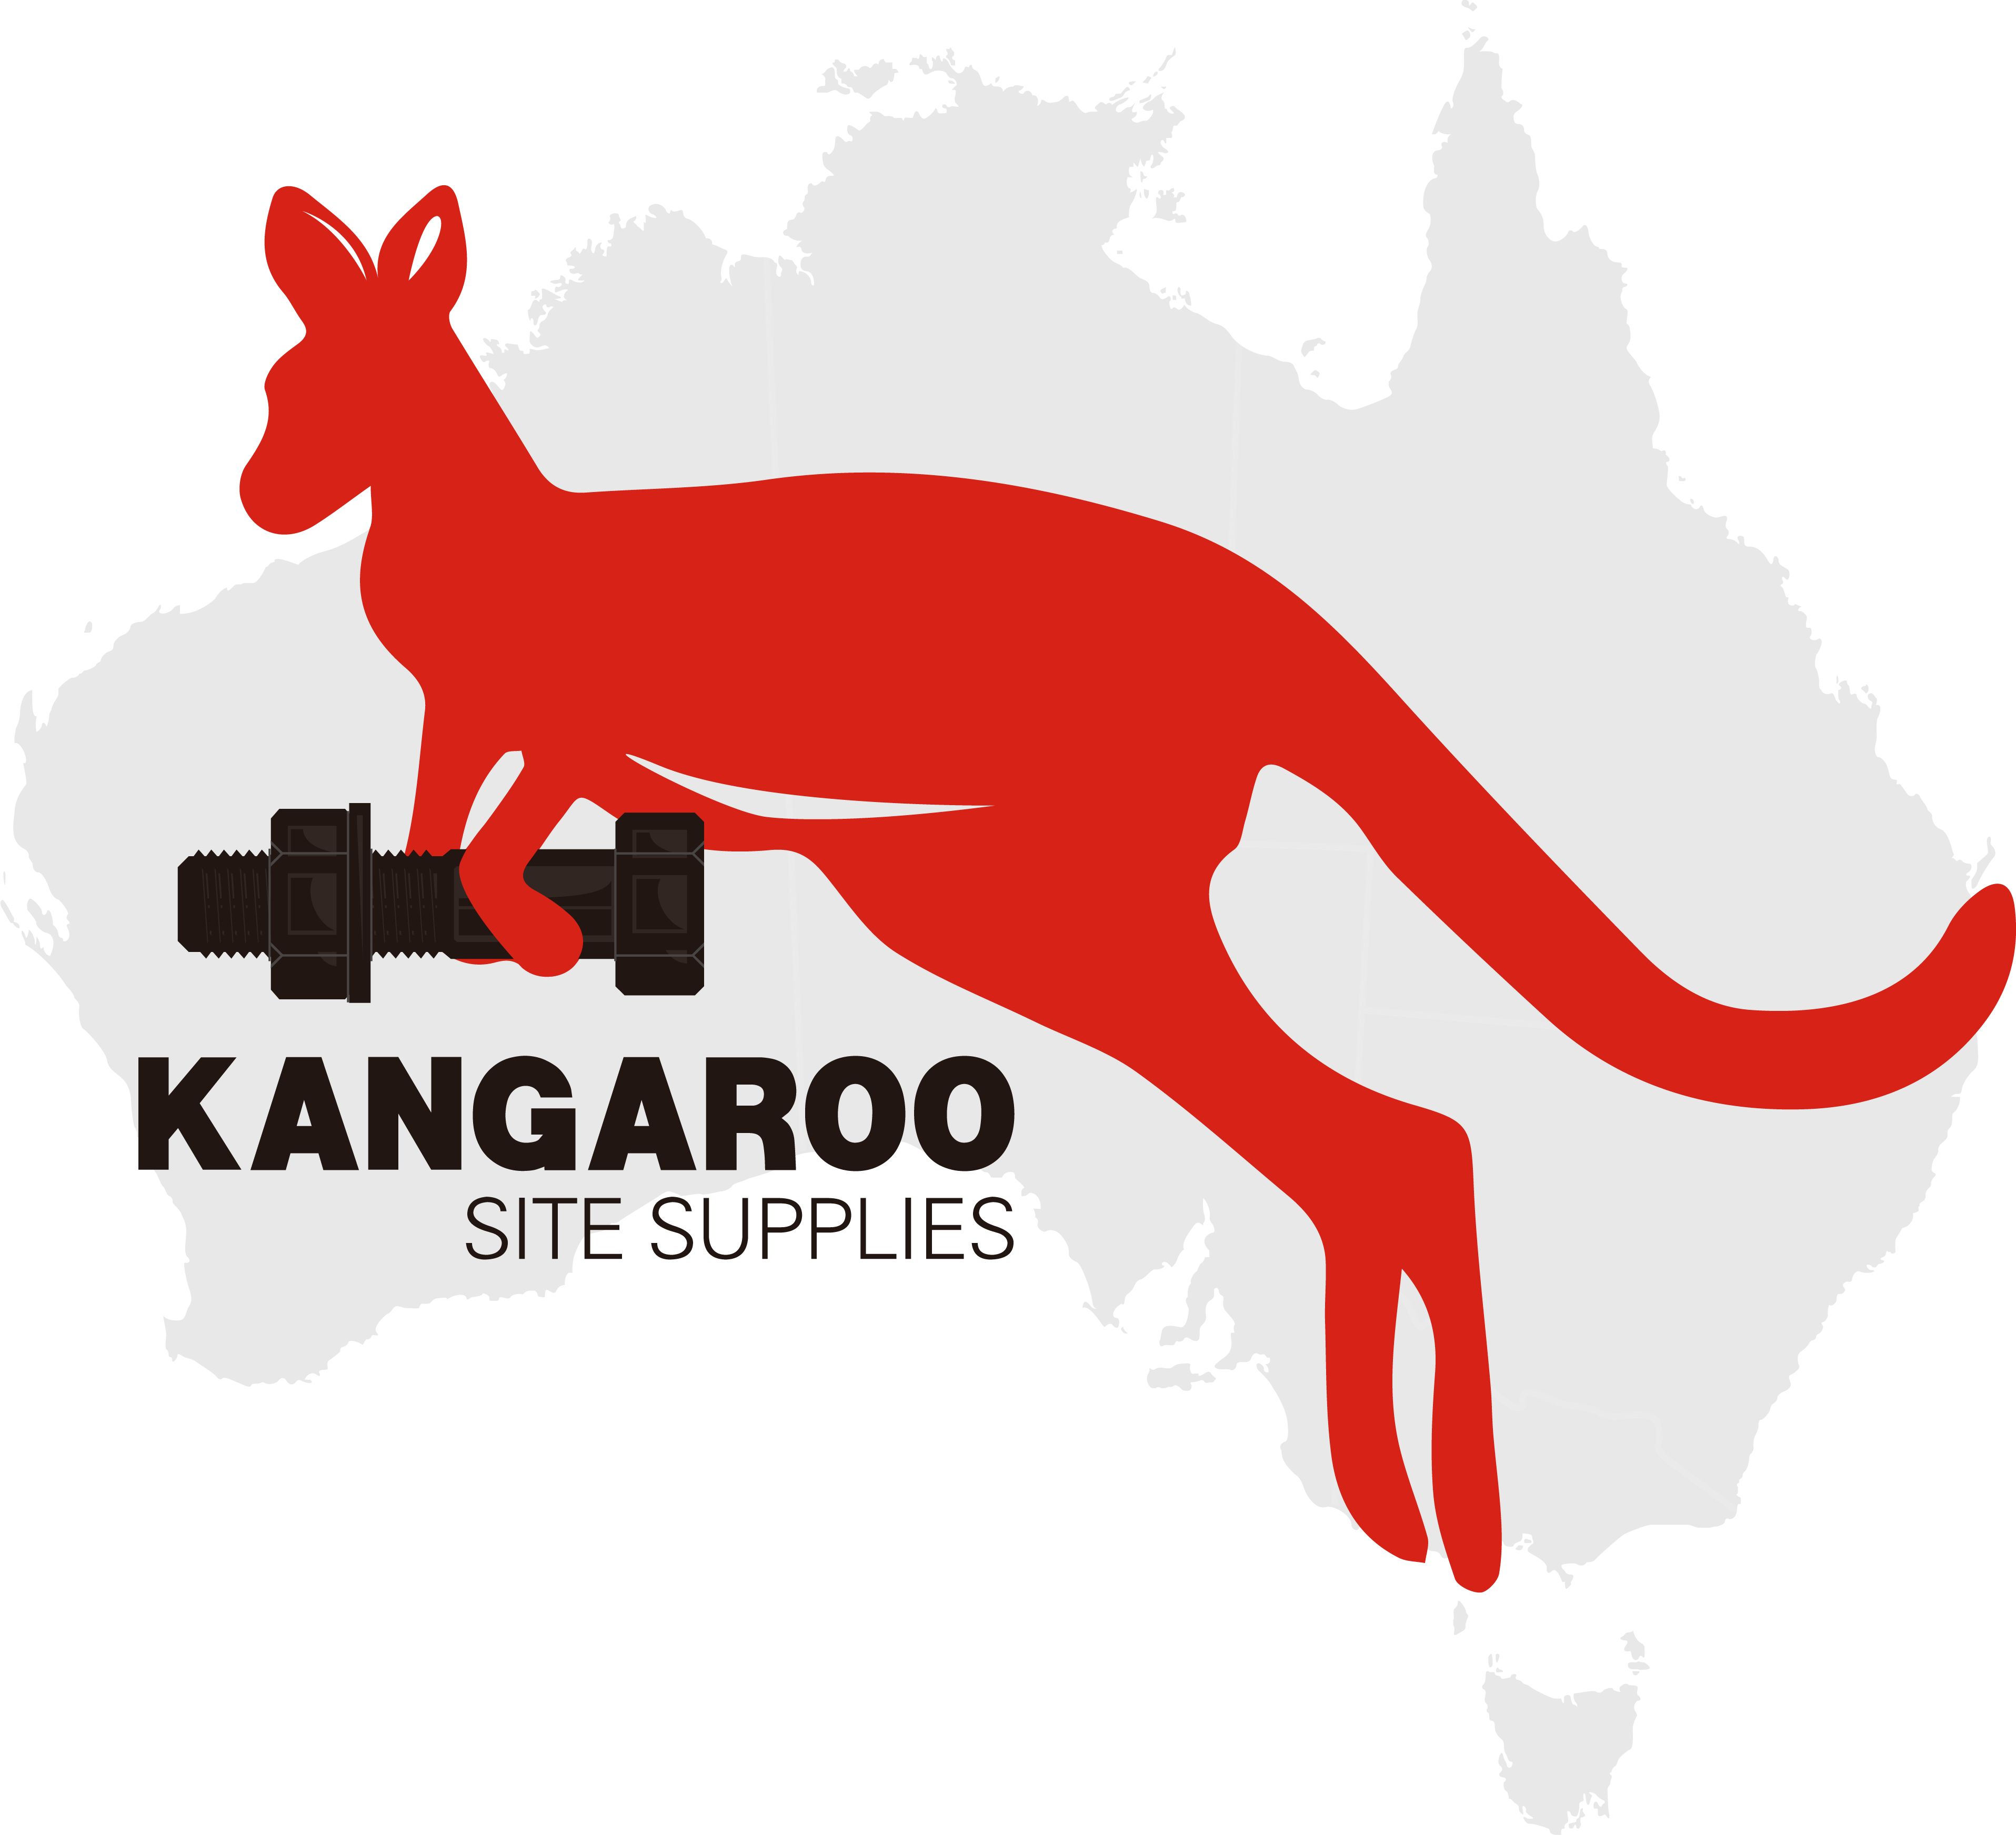 Kangaroo Site Supplies